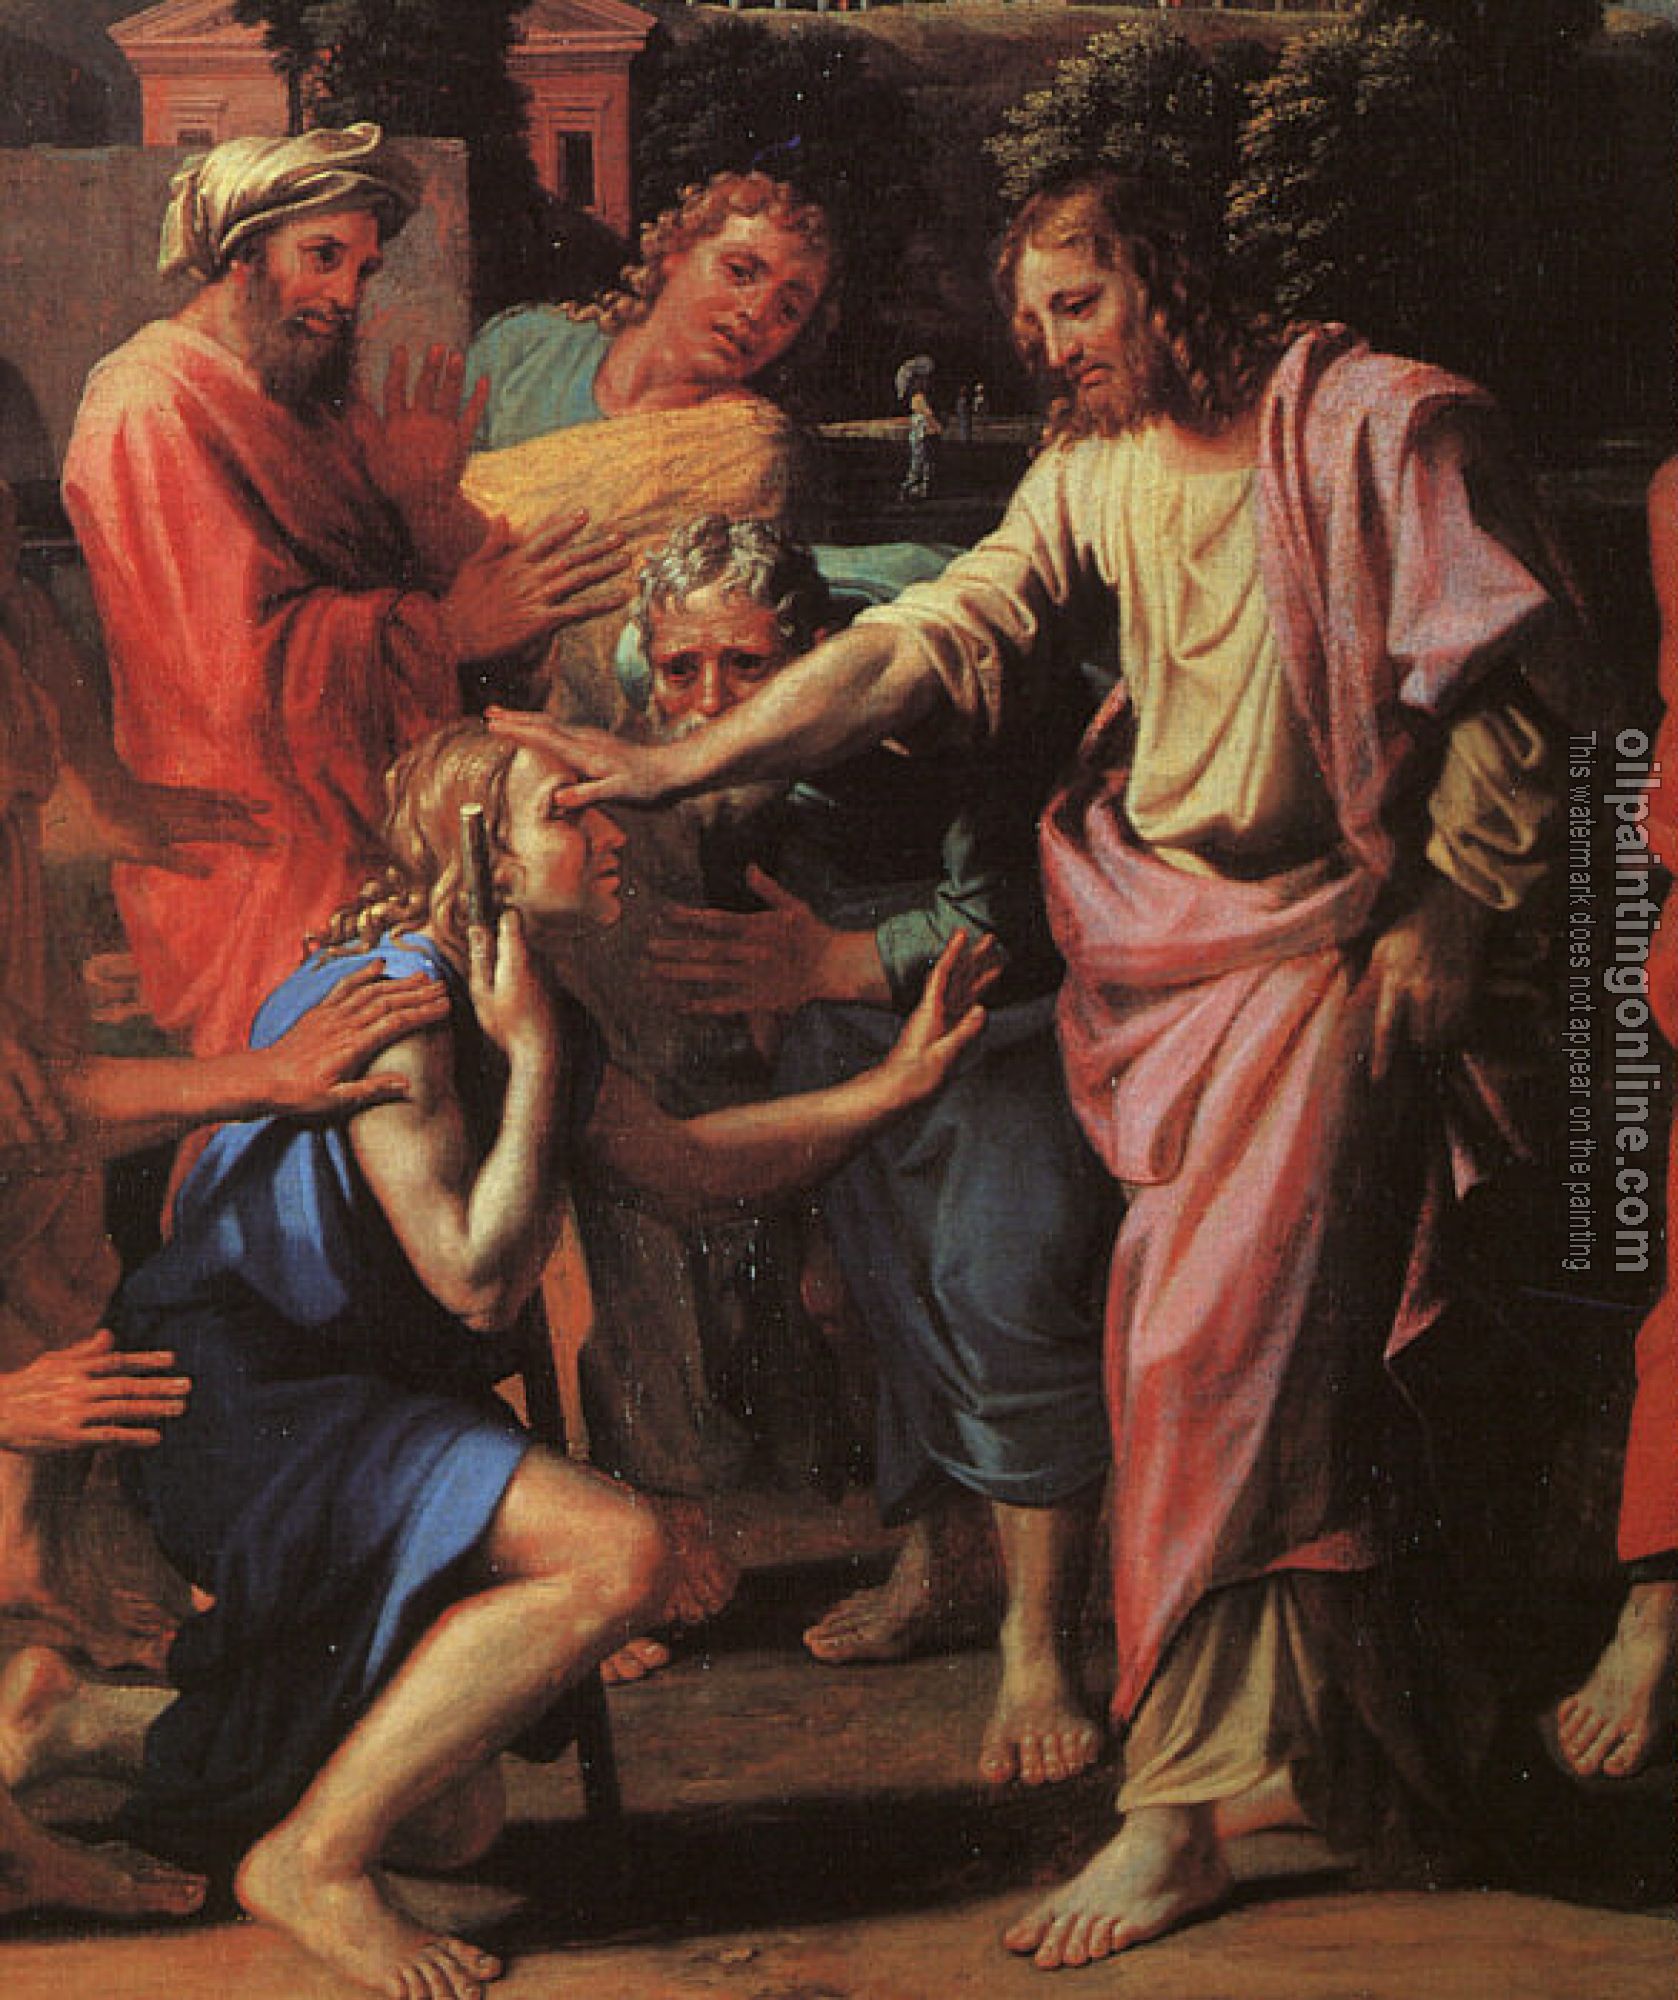 Poussin, Nicolas - Jesus Healing the Blind of Jericho